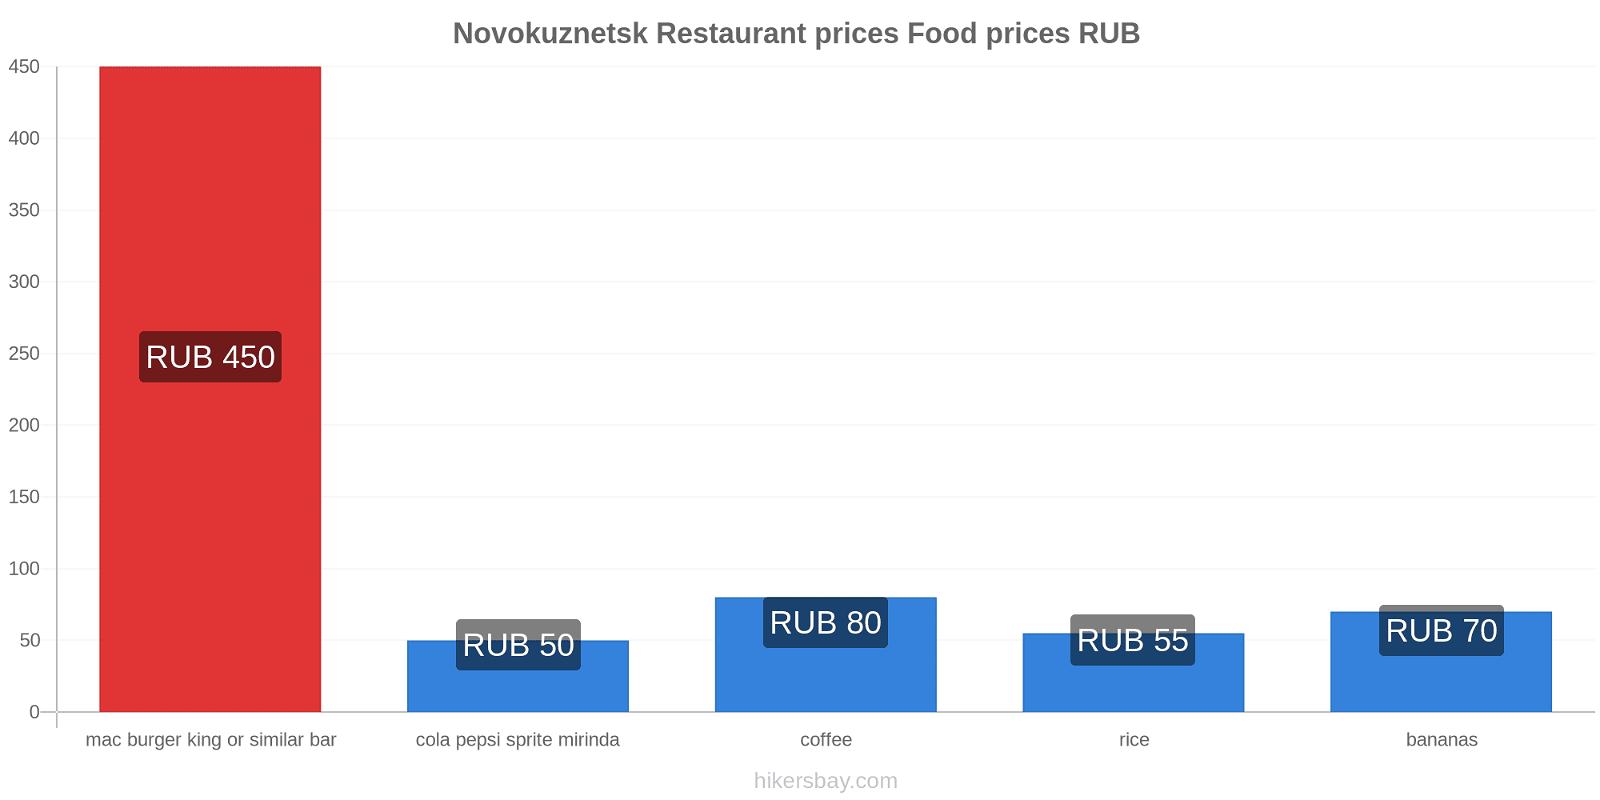 Novokuznetsk price changes hikersbay.com